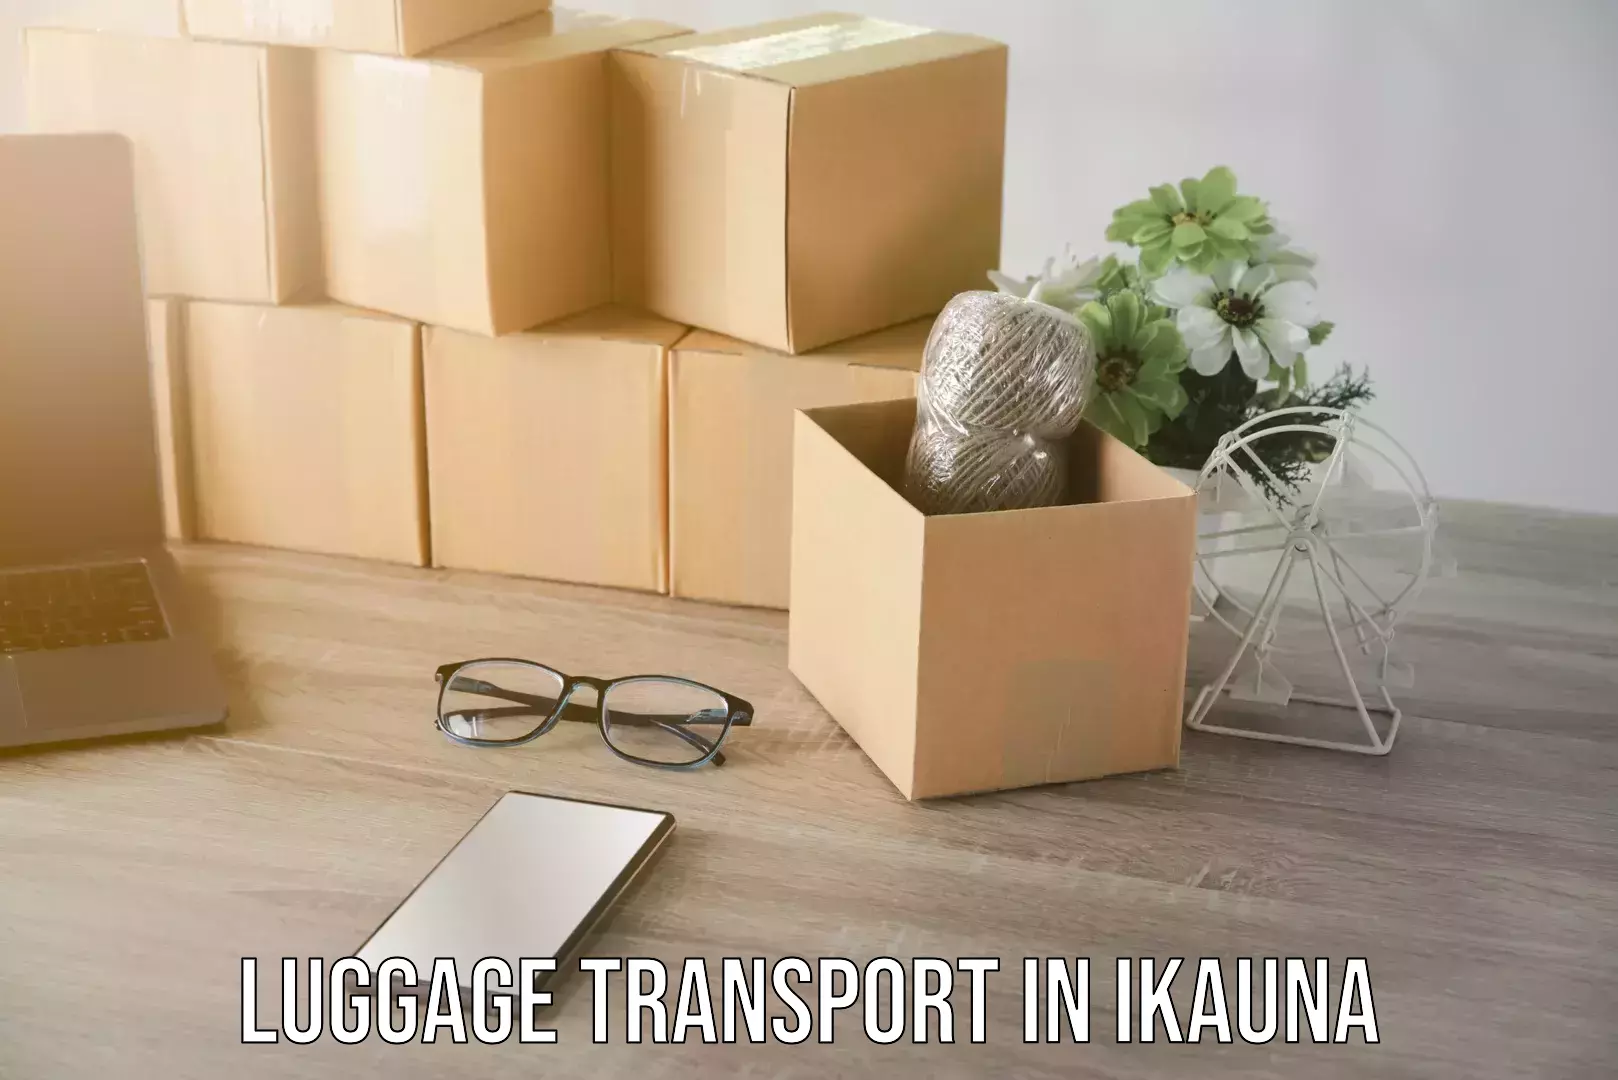 Domestic luggage transport in Ikauna